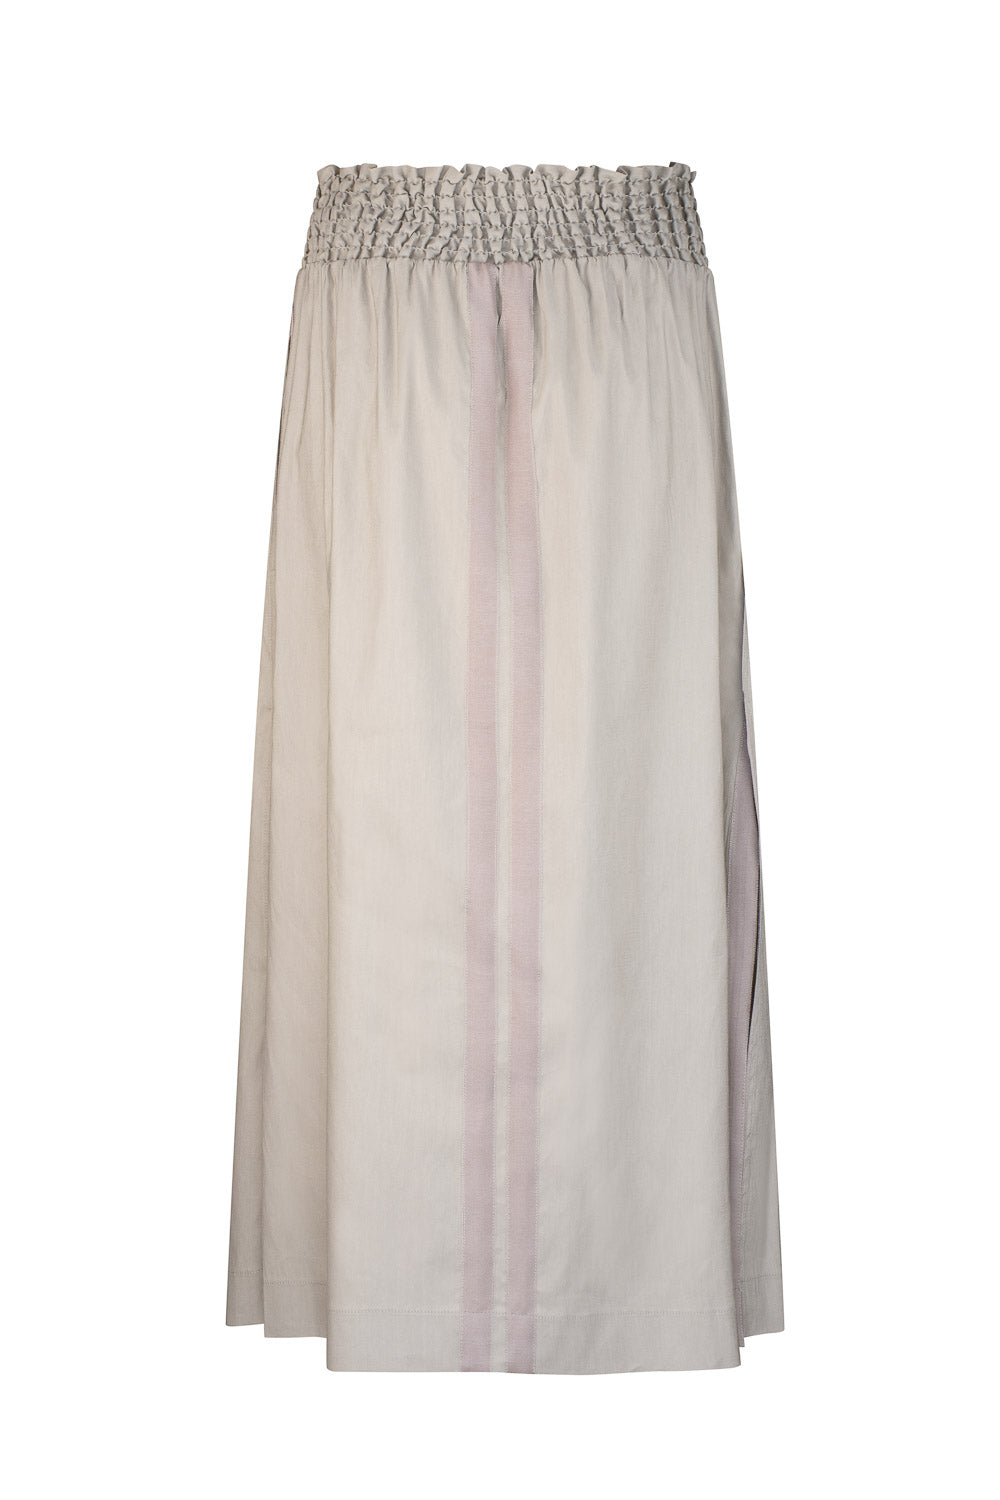 Mojito Shirred Linen Skirt